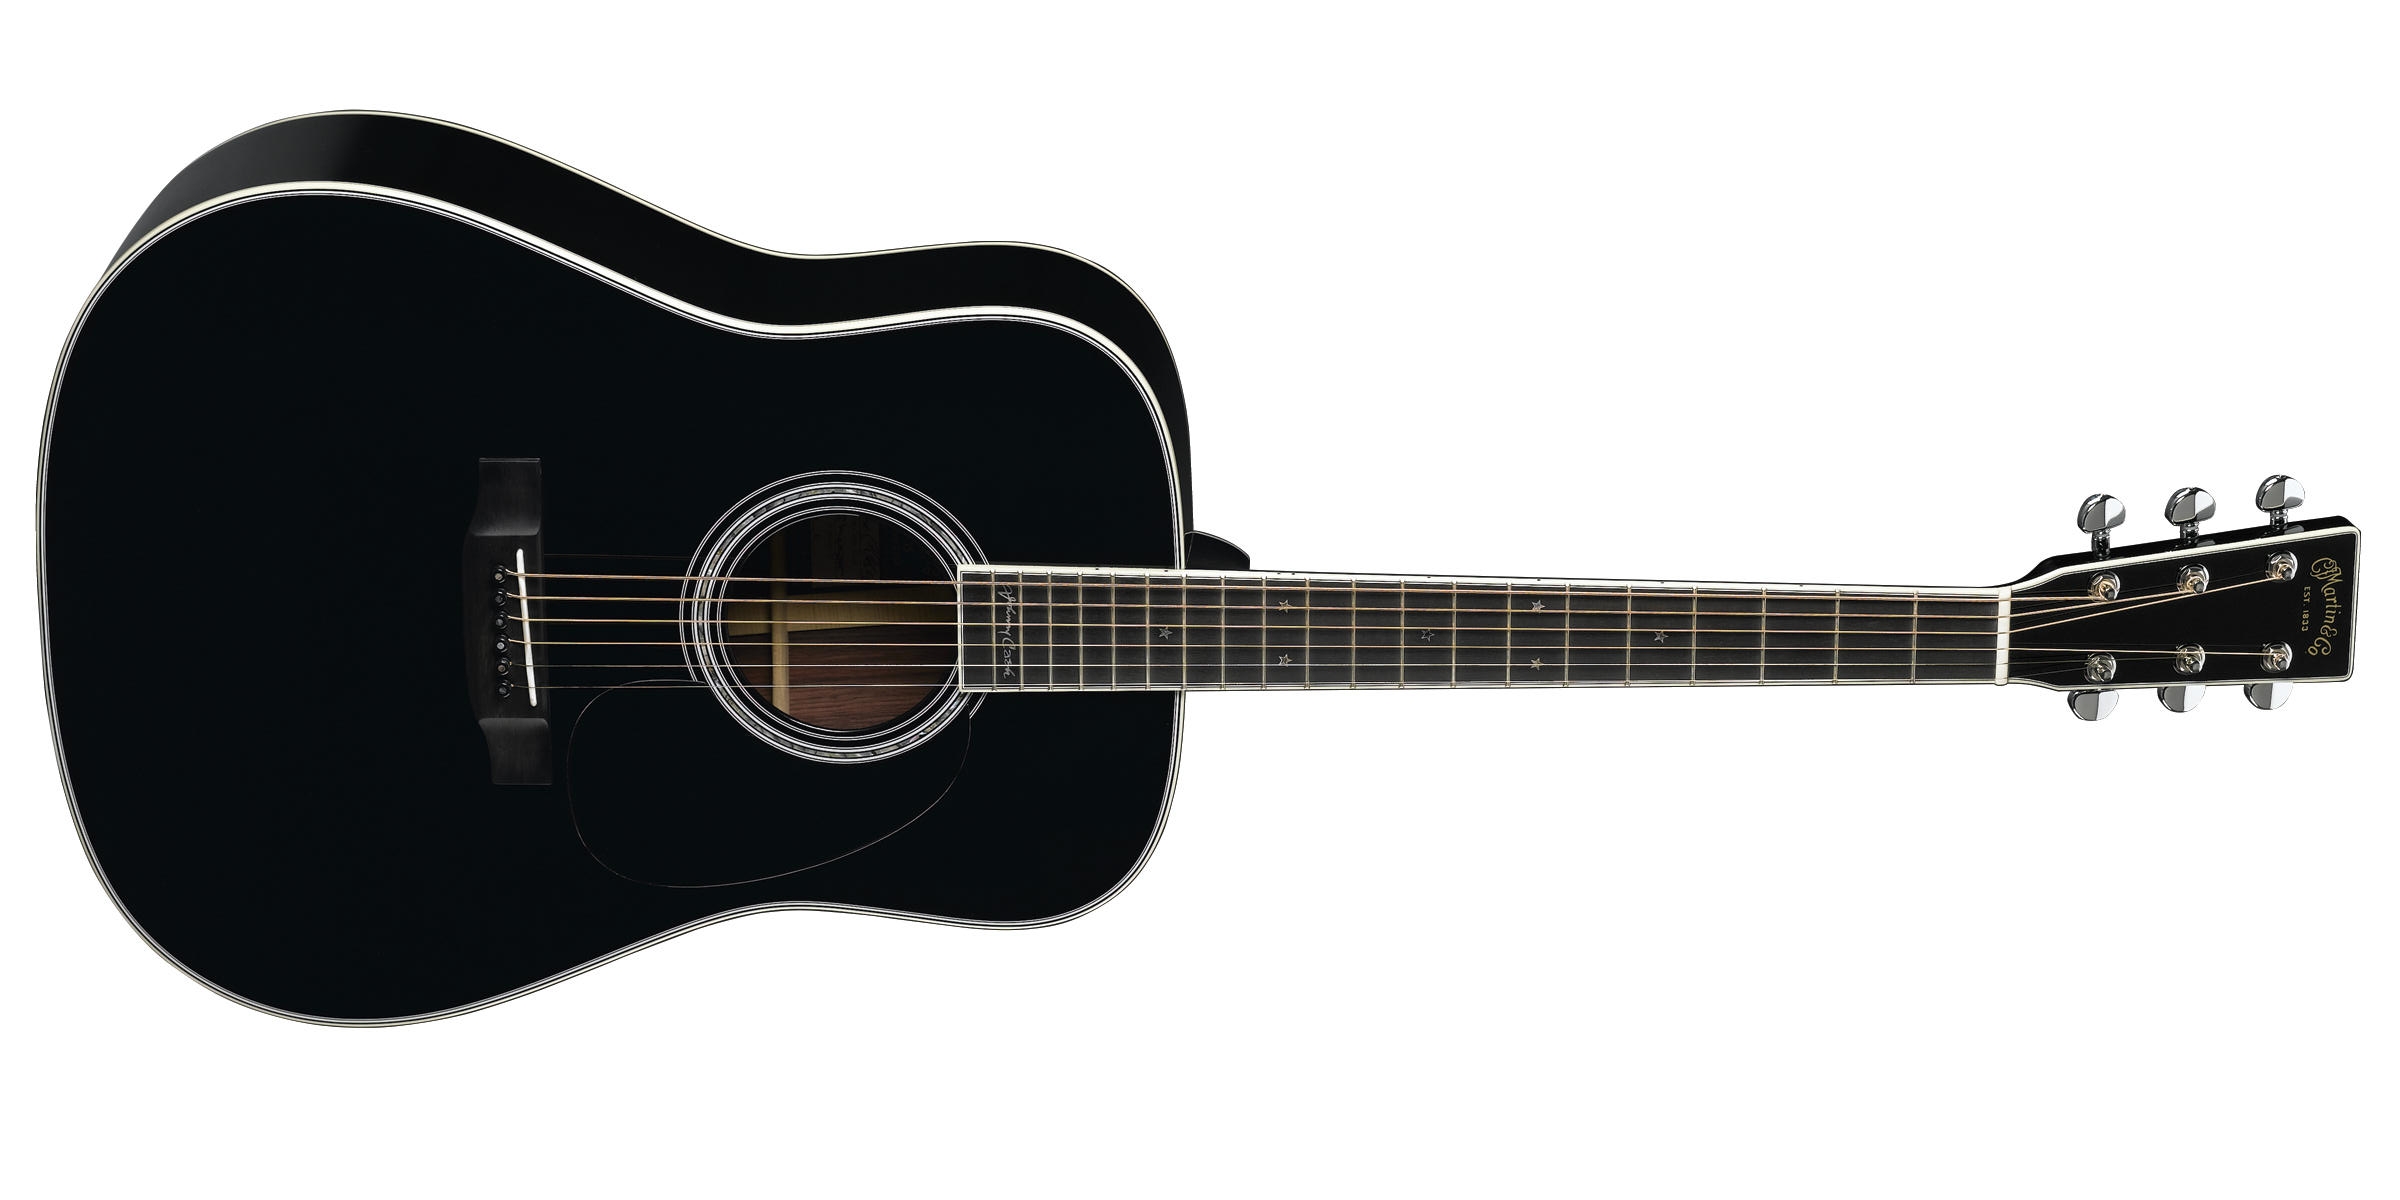 D 35 б. Martin Guitars d35. Акустическая гитара Martin Guitars d35 Johnny Cash. Гитара Мартинез Блэк. Гитара акустическая модель ф 101.